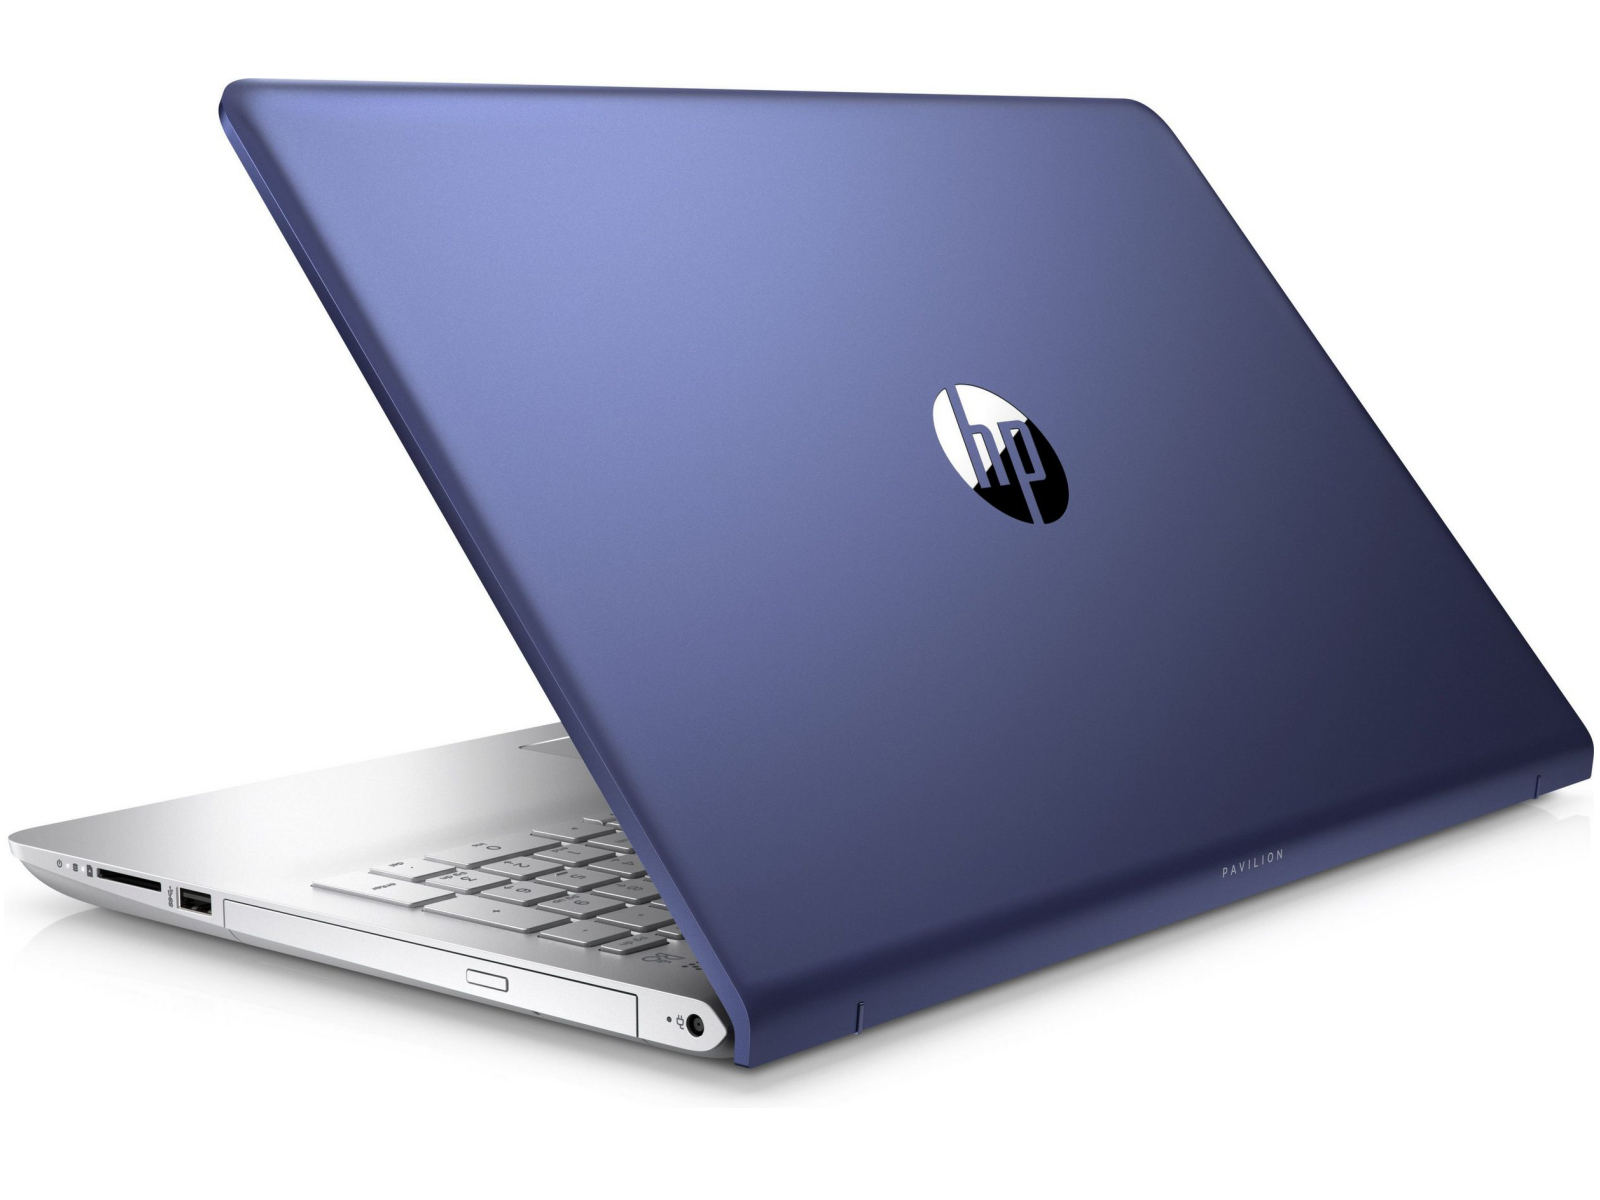 HP Pavilion 15t (i58250U, 940MX, FHD) Laptop Review NotebookCheck